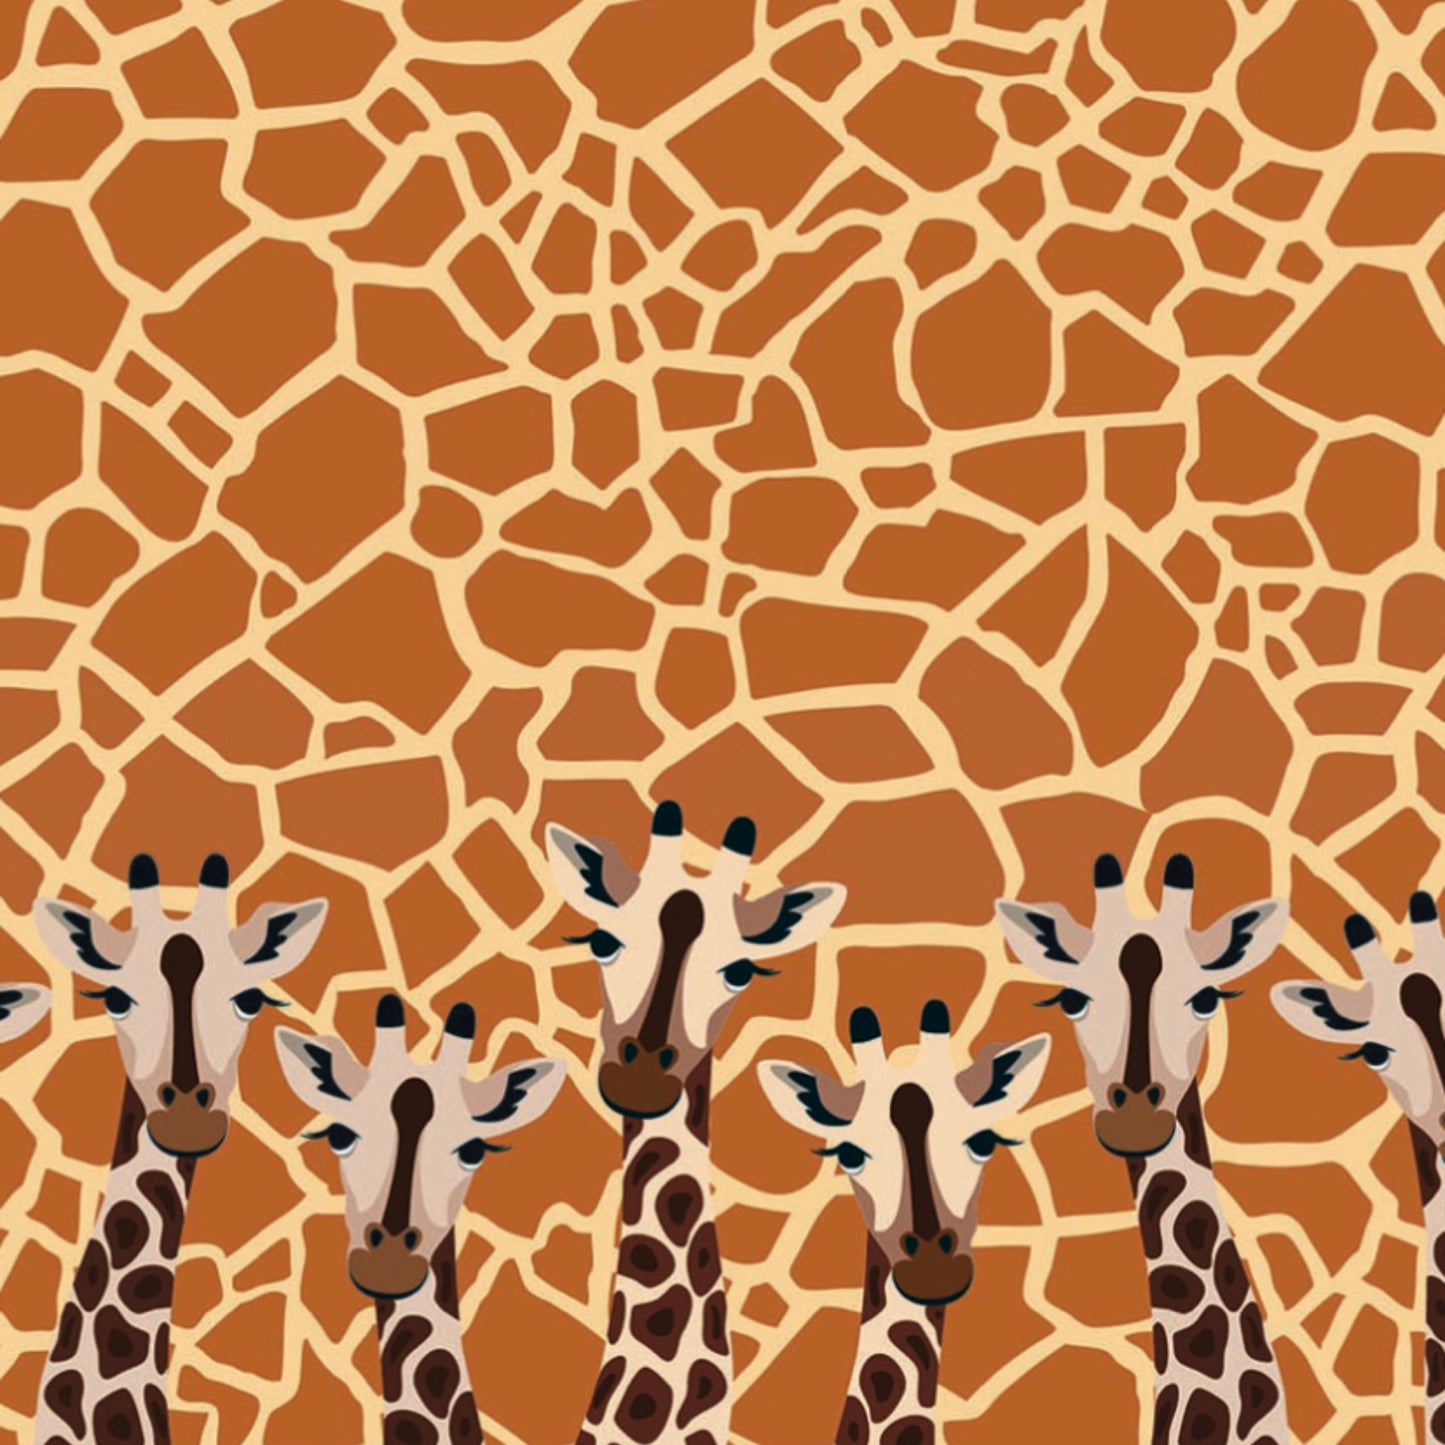 Andy-Giraffe-Animal-Print-Safari-Mod-Retro-Vintage-Inspired-RainbowsAndFairies.com.au-ANDYG_ORG-01